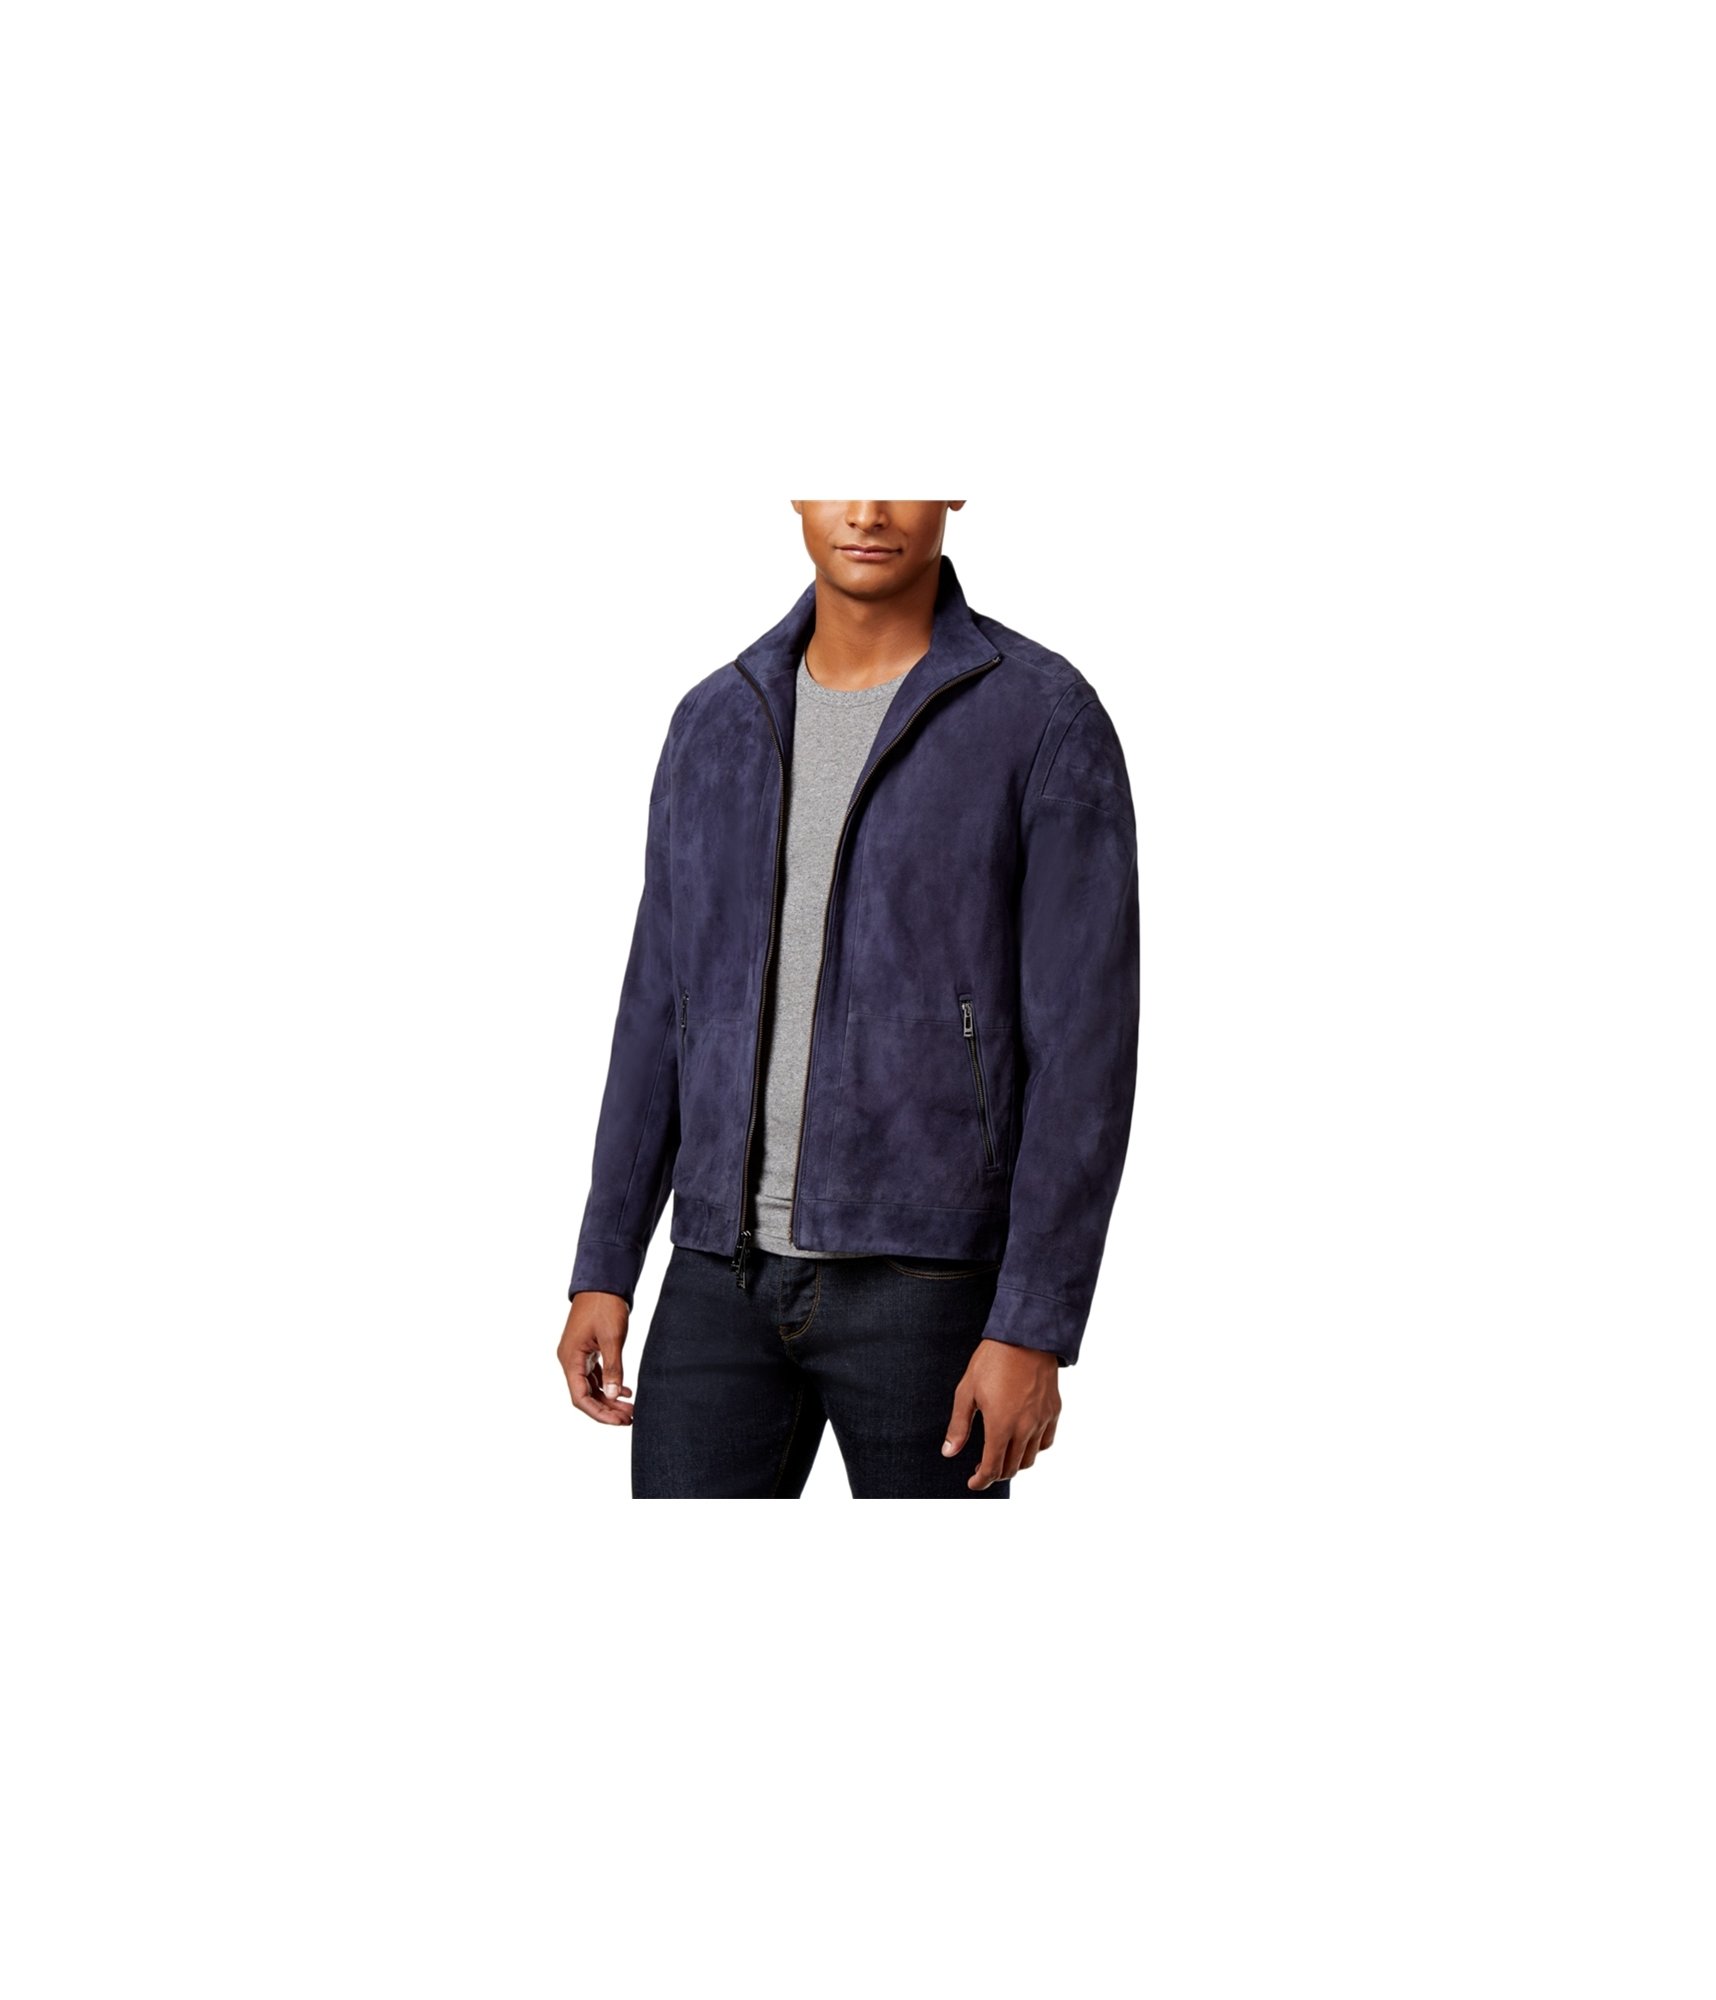 Buy Mens Calvin Klein Suede Leather Jacket Online | TagsWeekly.com